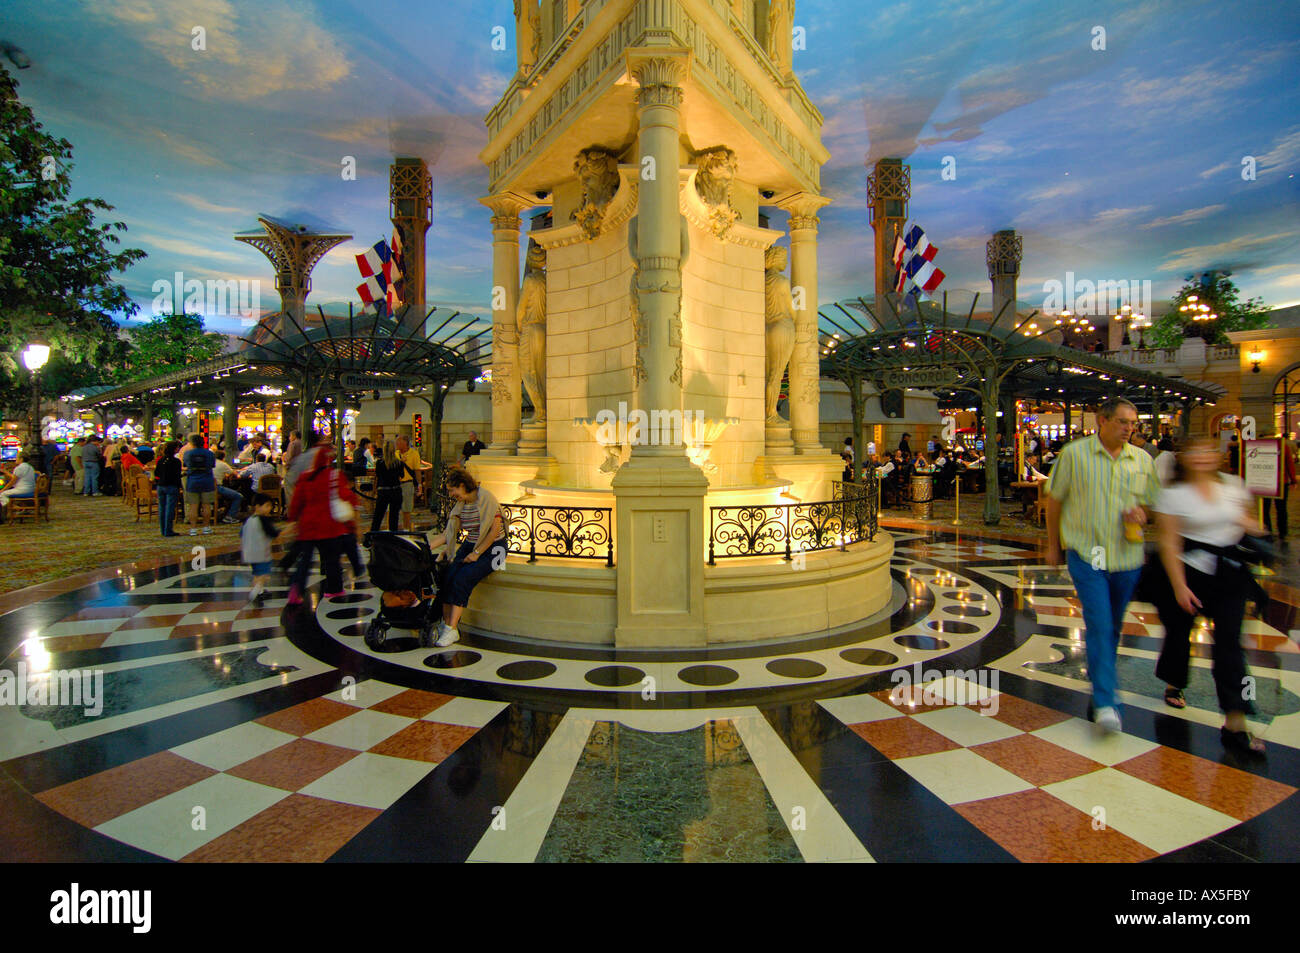 Interior paris las vegas casino hi-res stock photography and images - Alamy